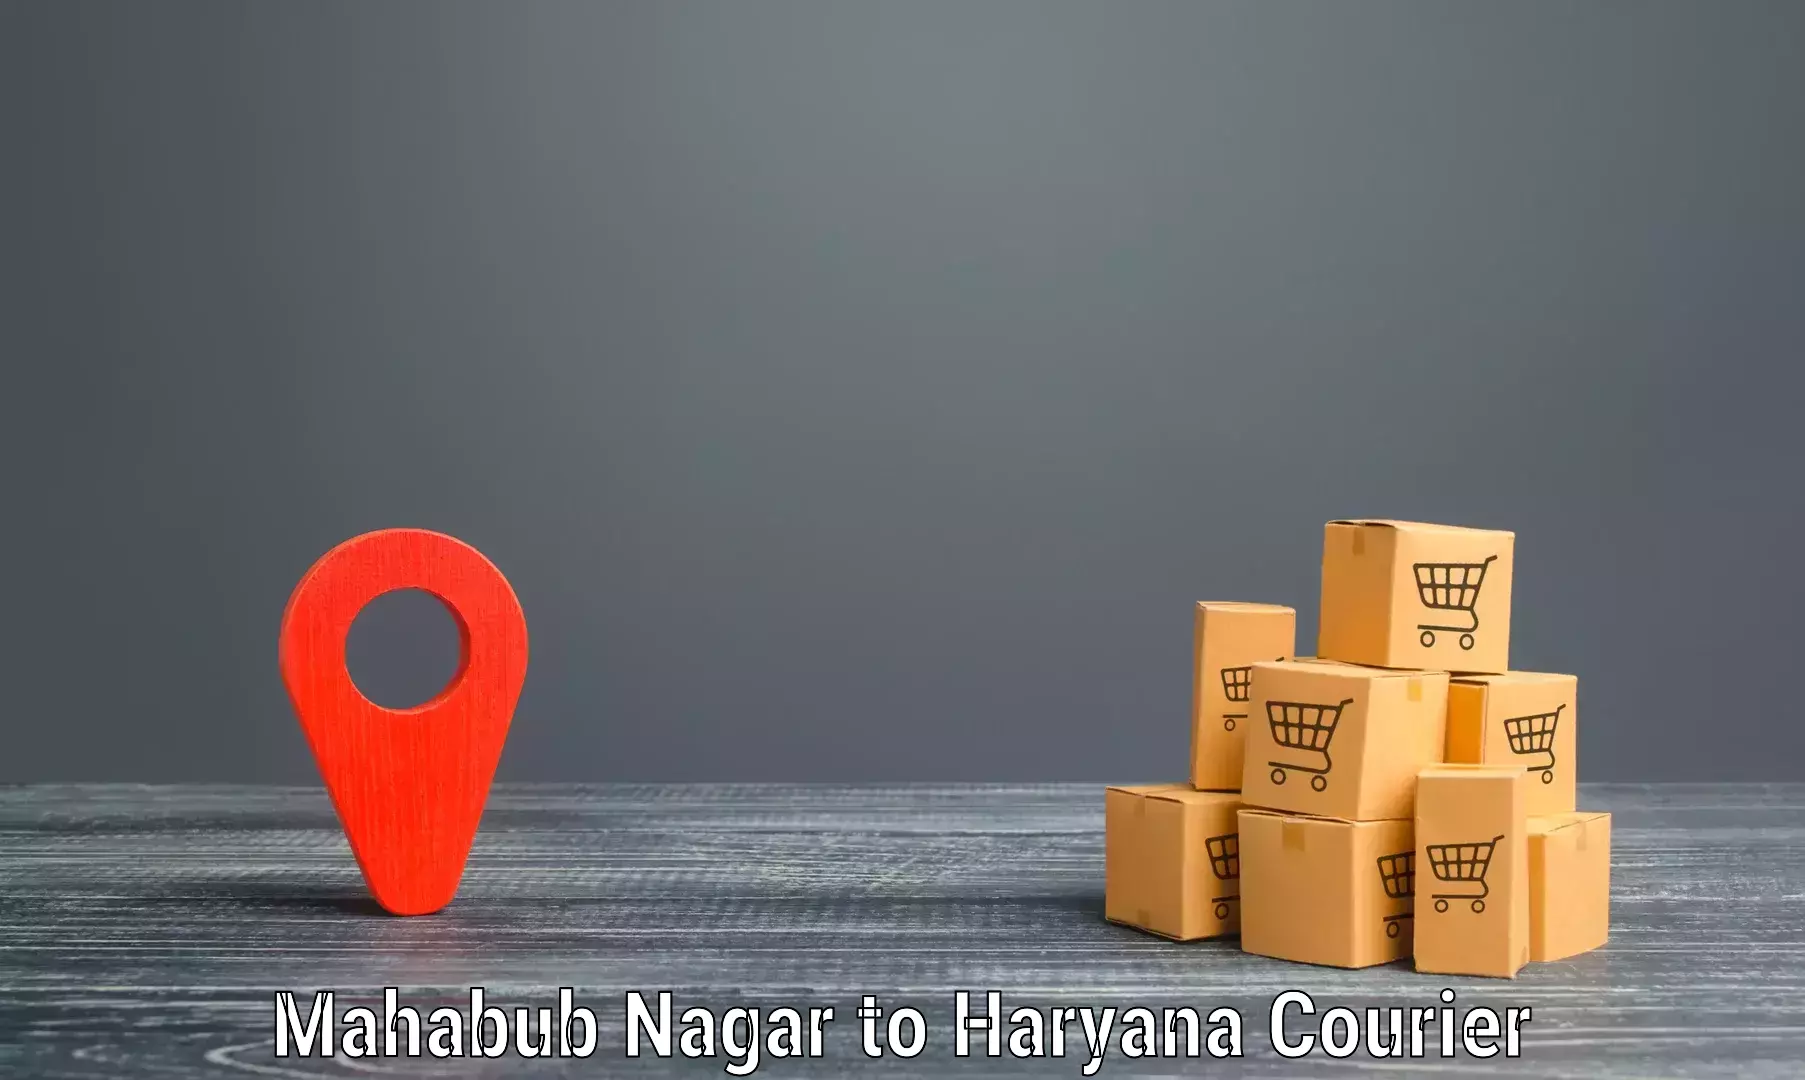 High-speed delivery Mahabub Nagar to Gurgaon